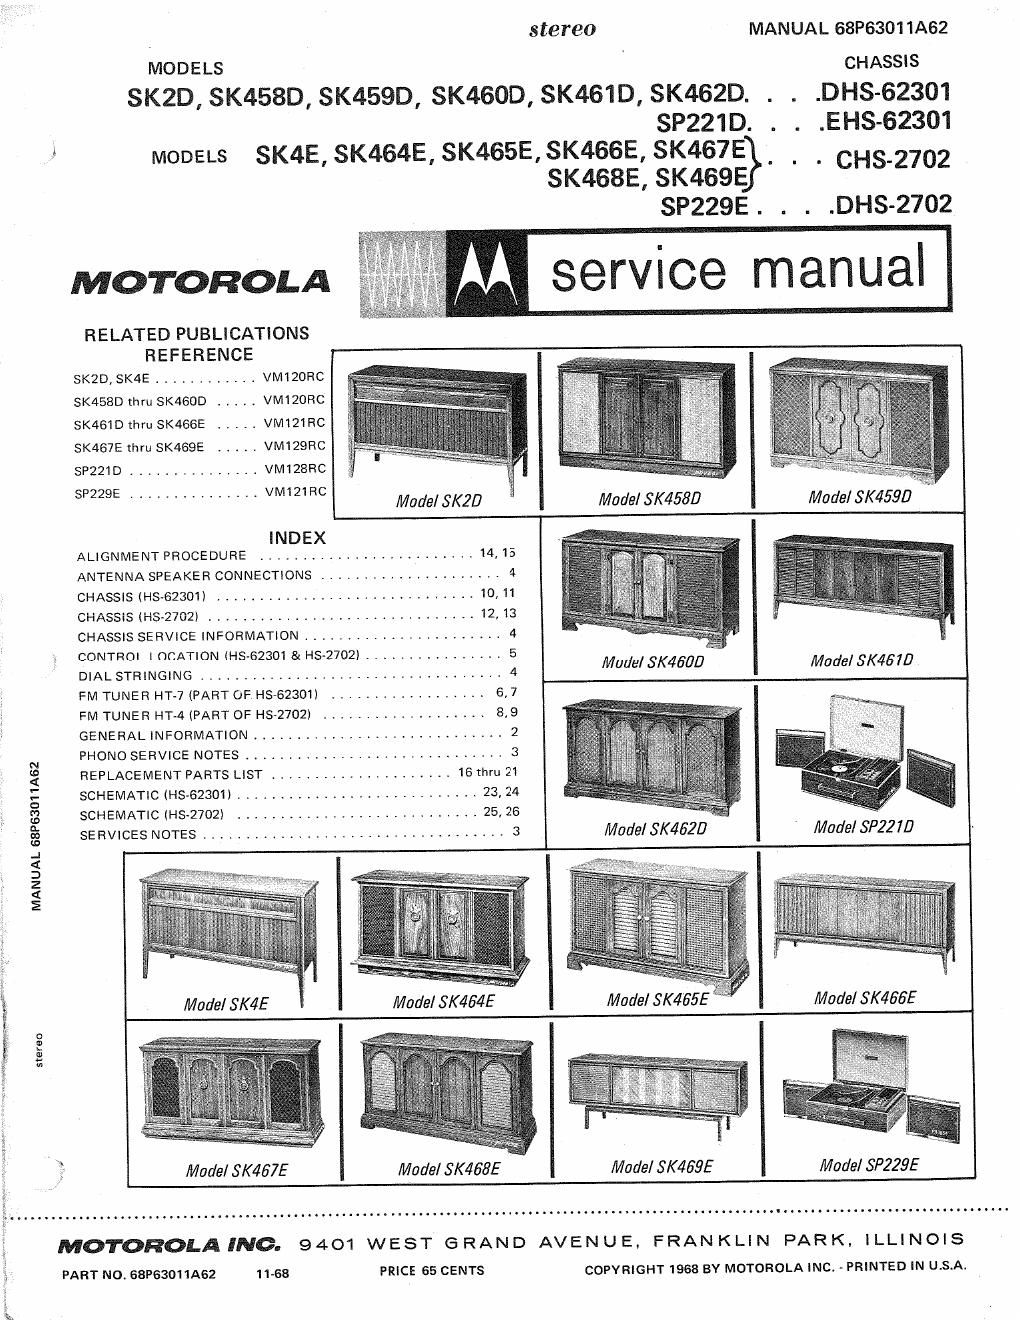 motorola sk 467 e service manual